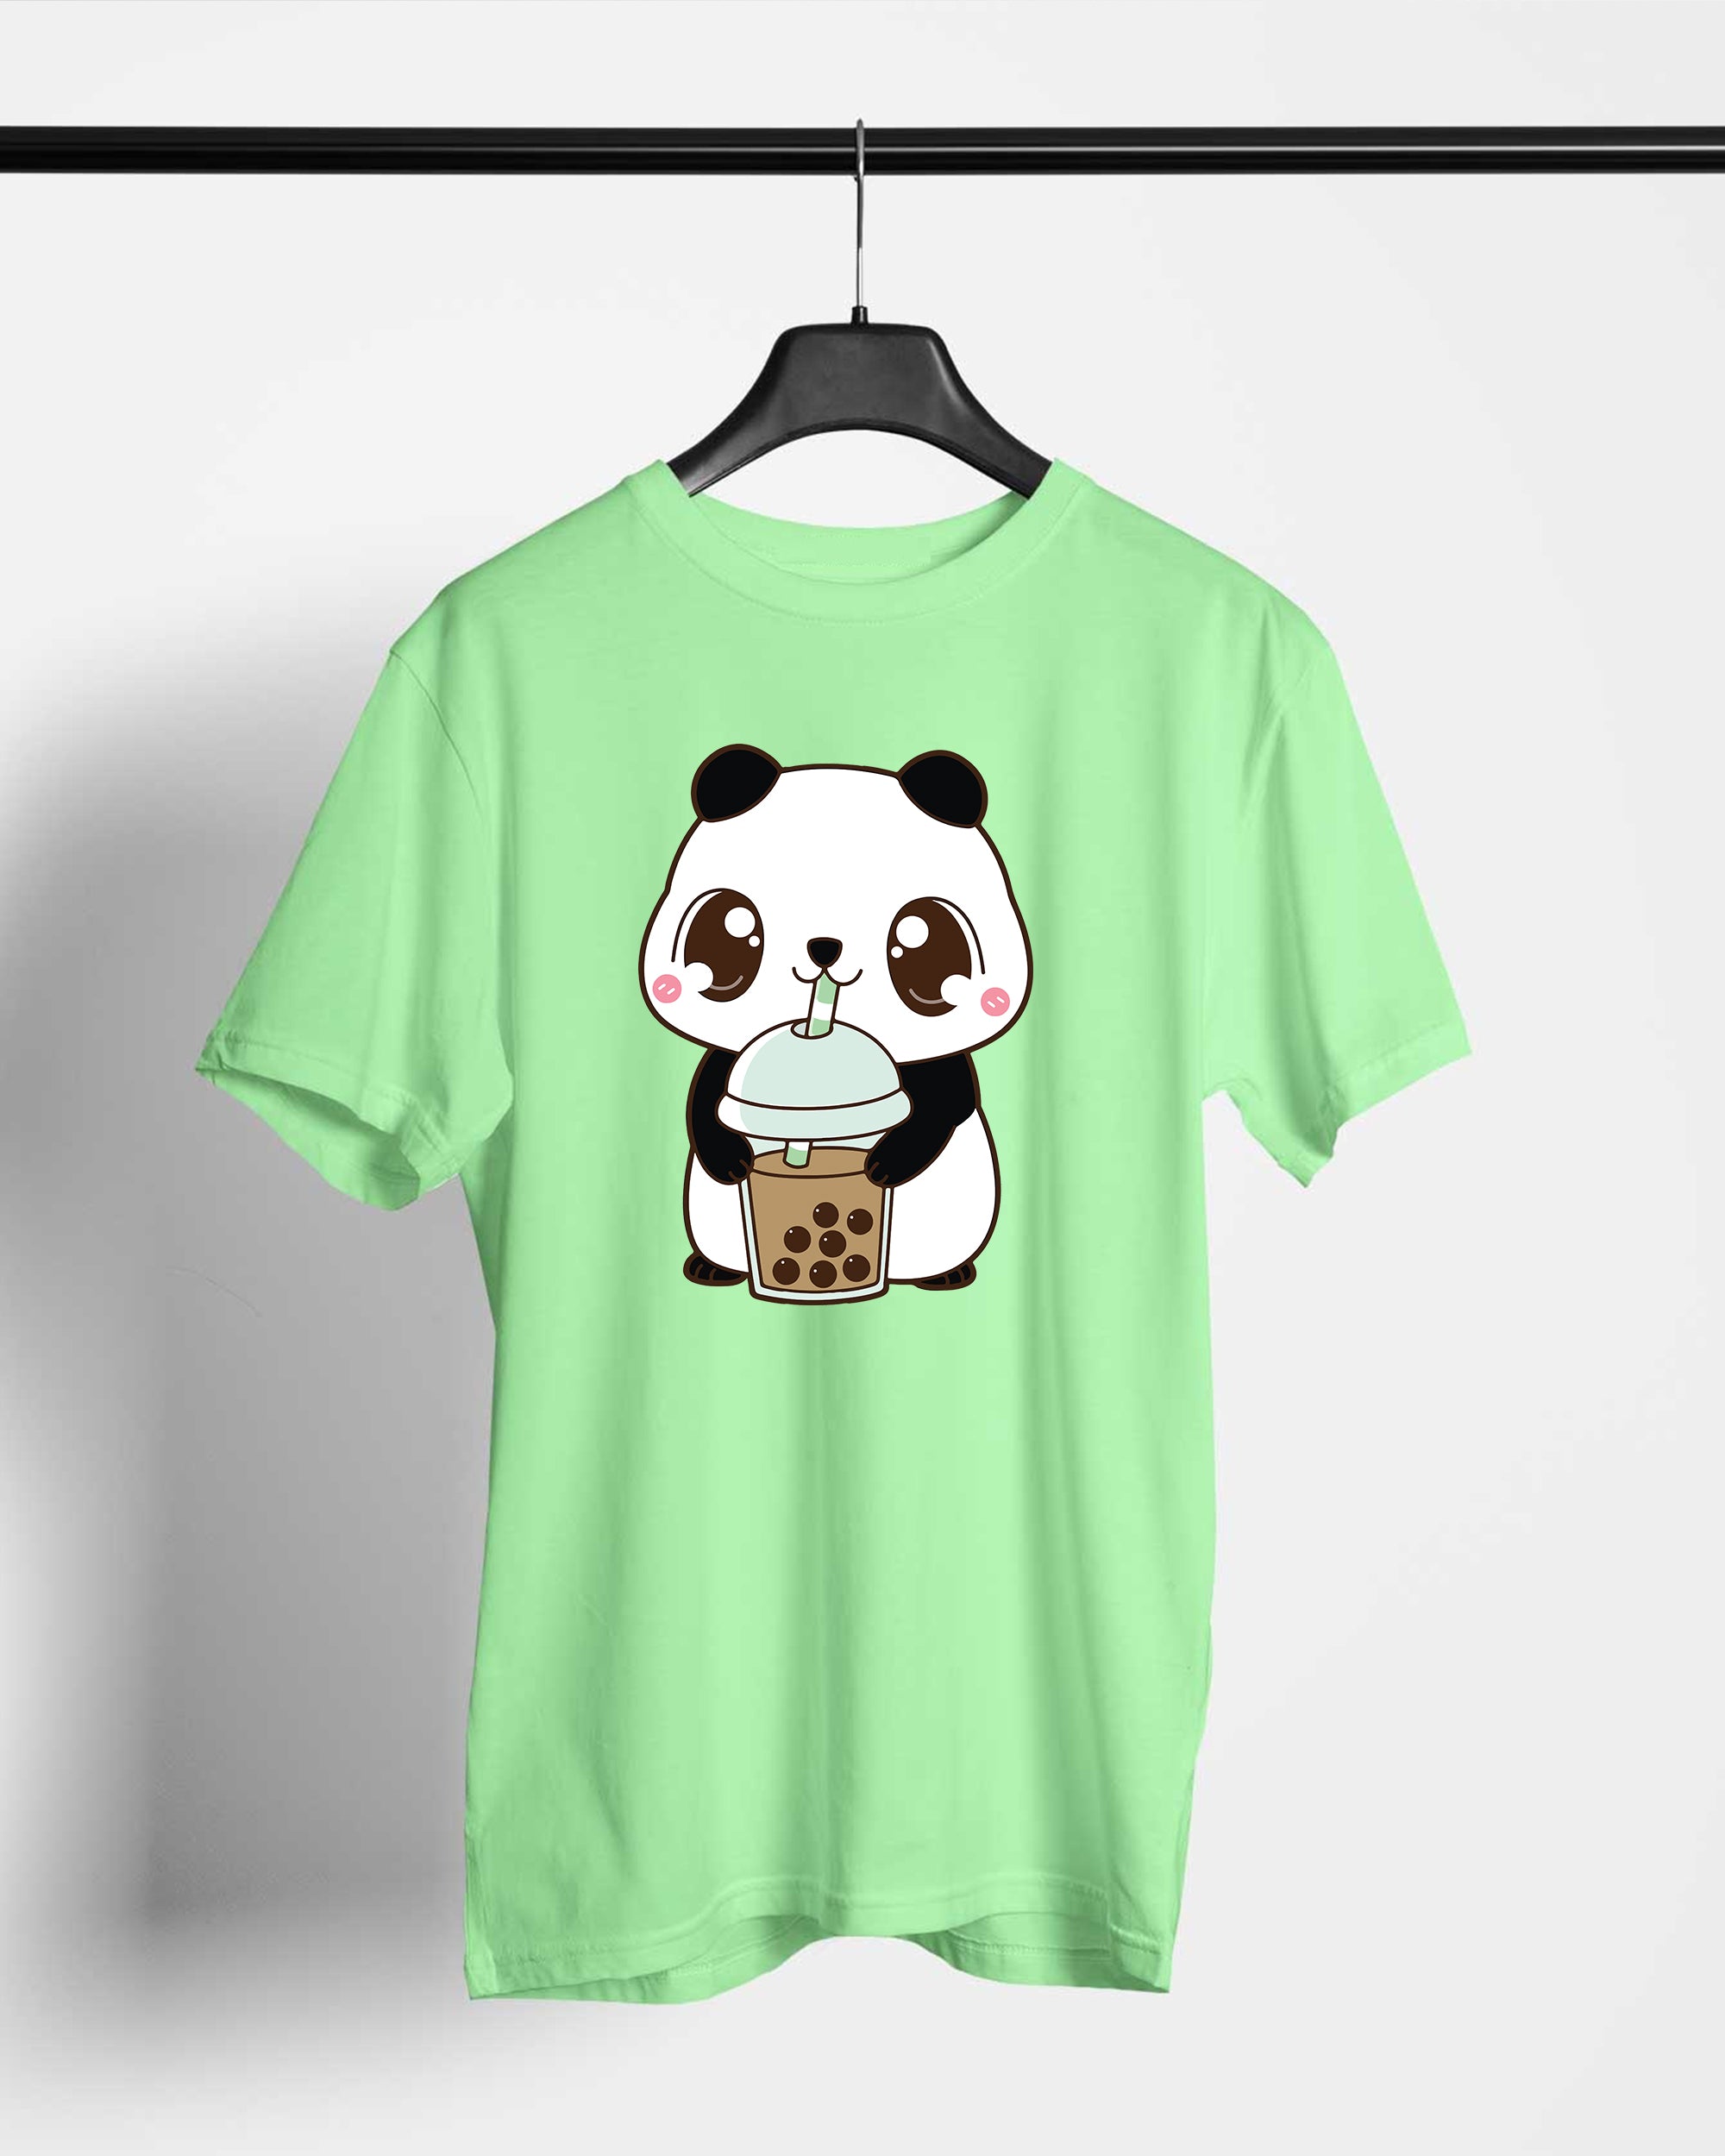 Panda Pista For Men T-Shirts || Pista || Stylish Tshirts || 100% Cotton || Best T-Shirt For Men's